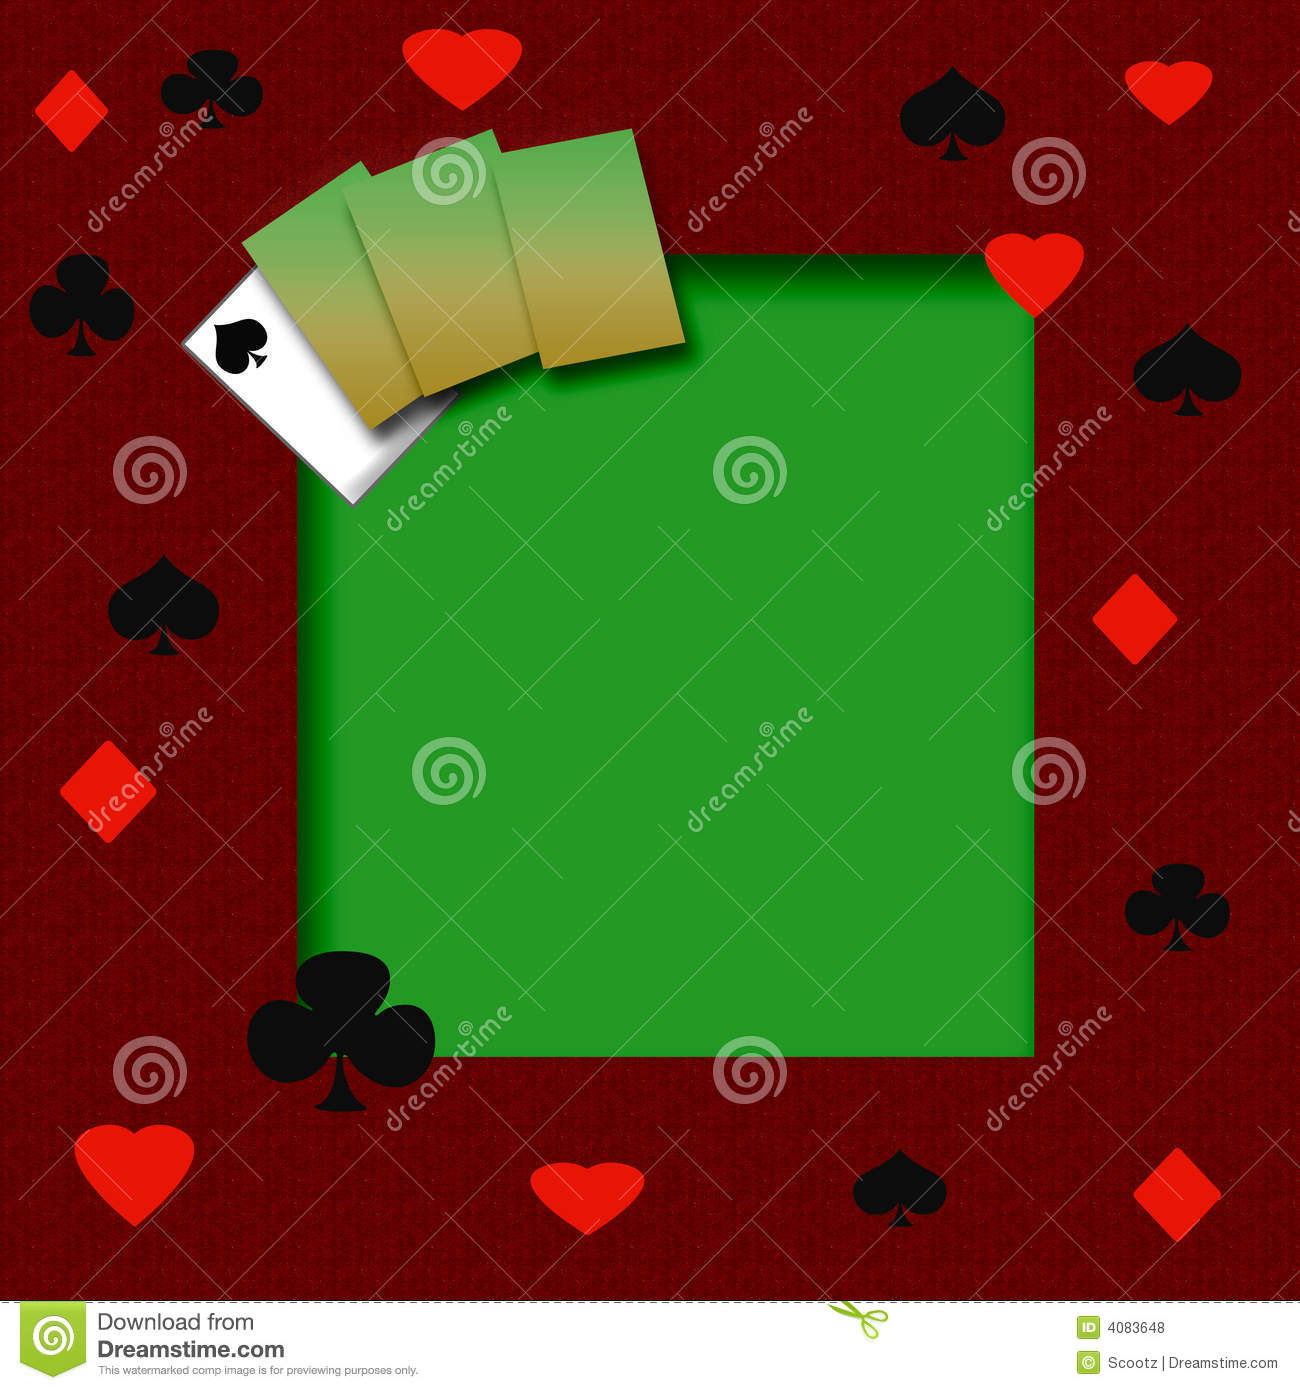 Poker Game Frame Royalty Free Stock Photos   Image  4083648